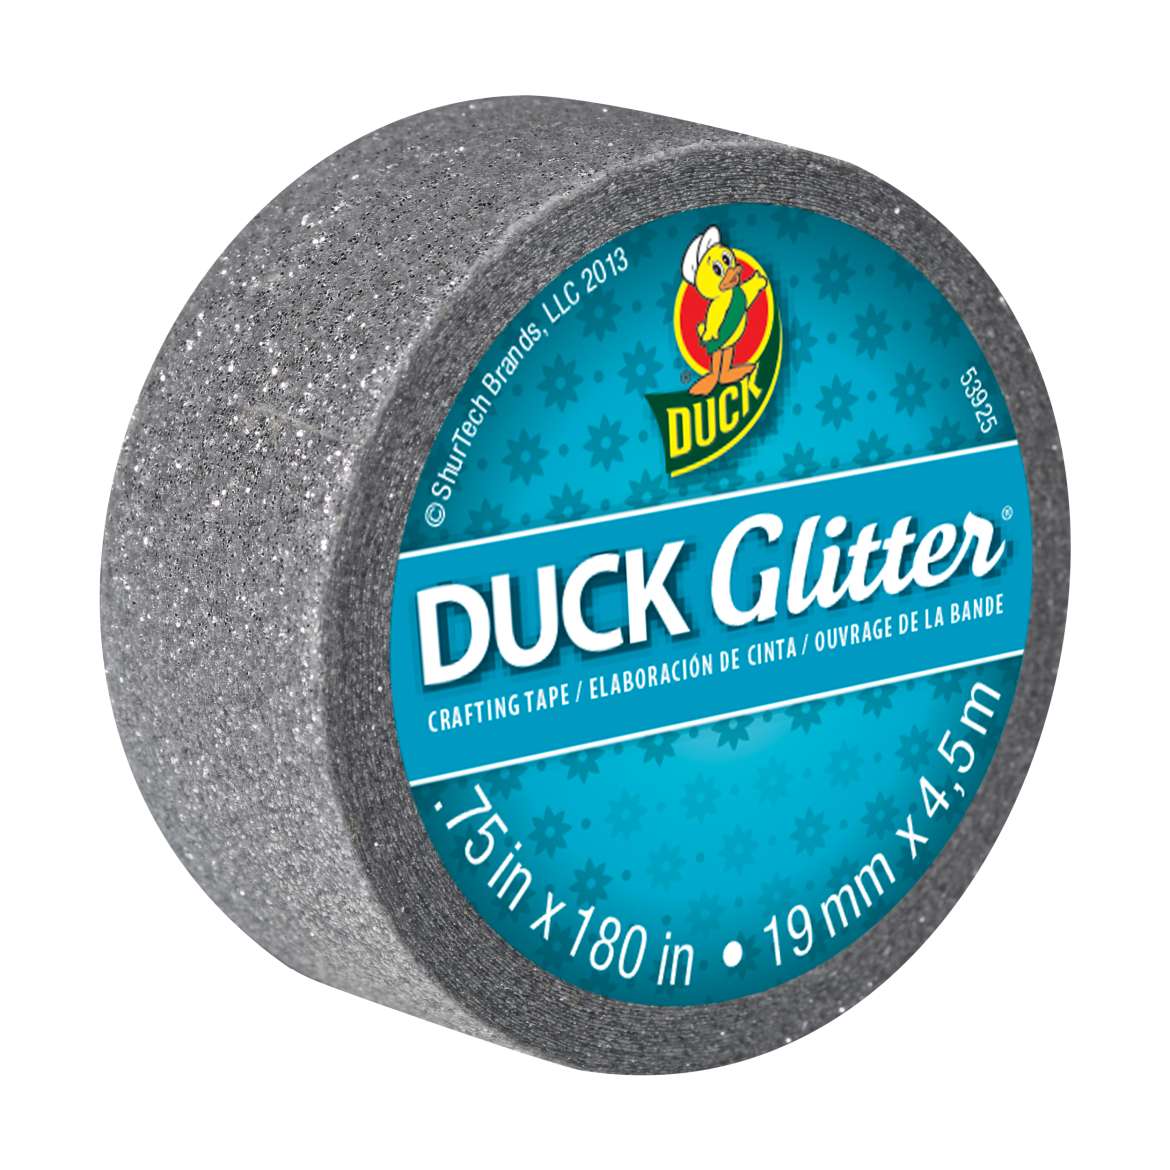 Duck Glitter® Crafting Tape Mini-Rolls Image